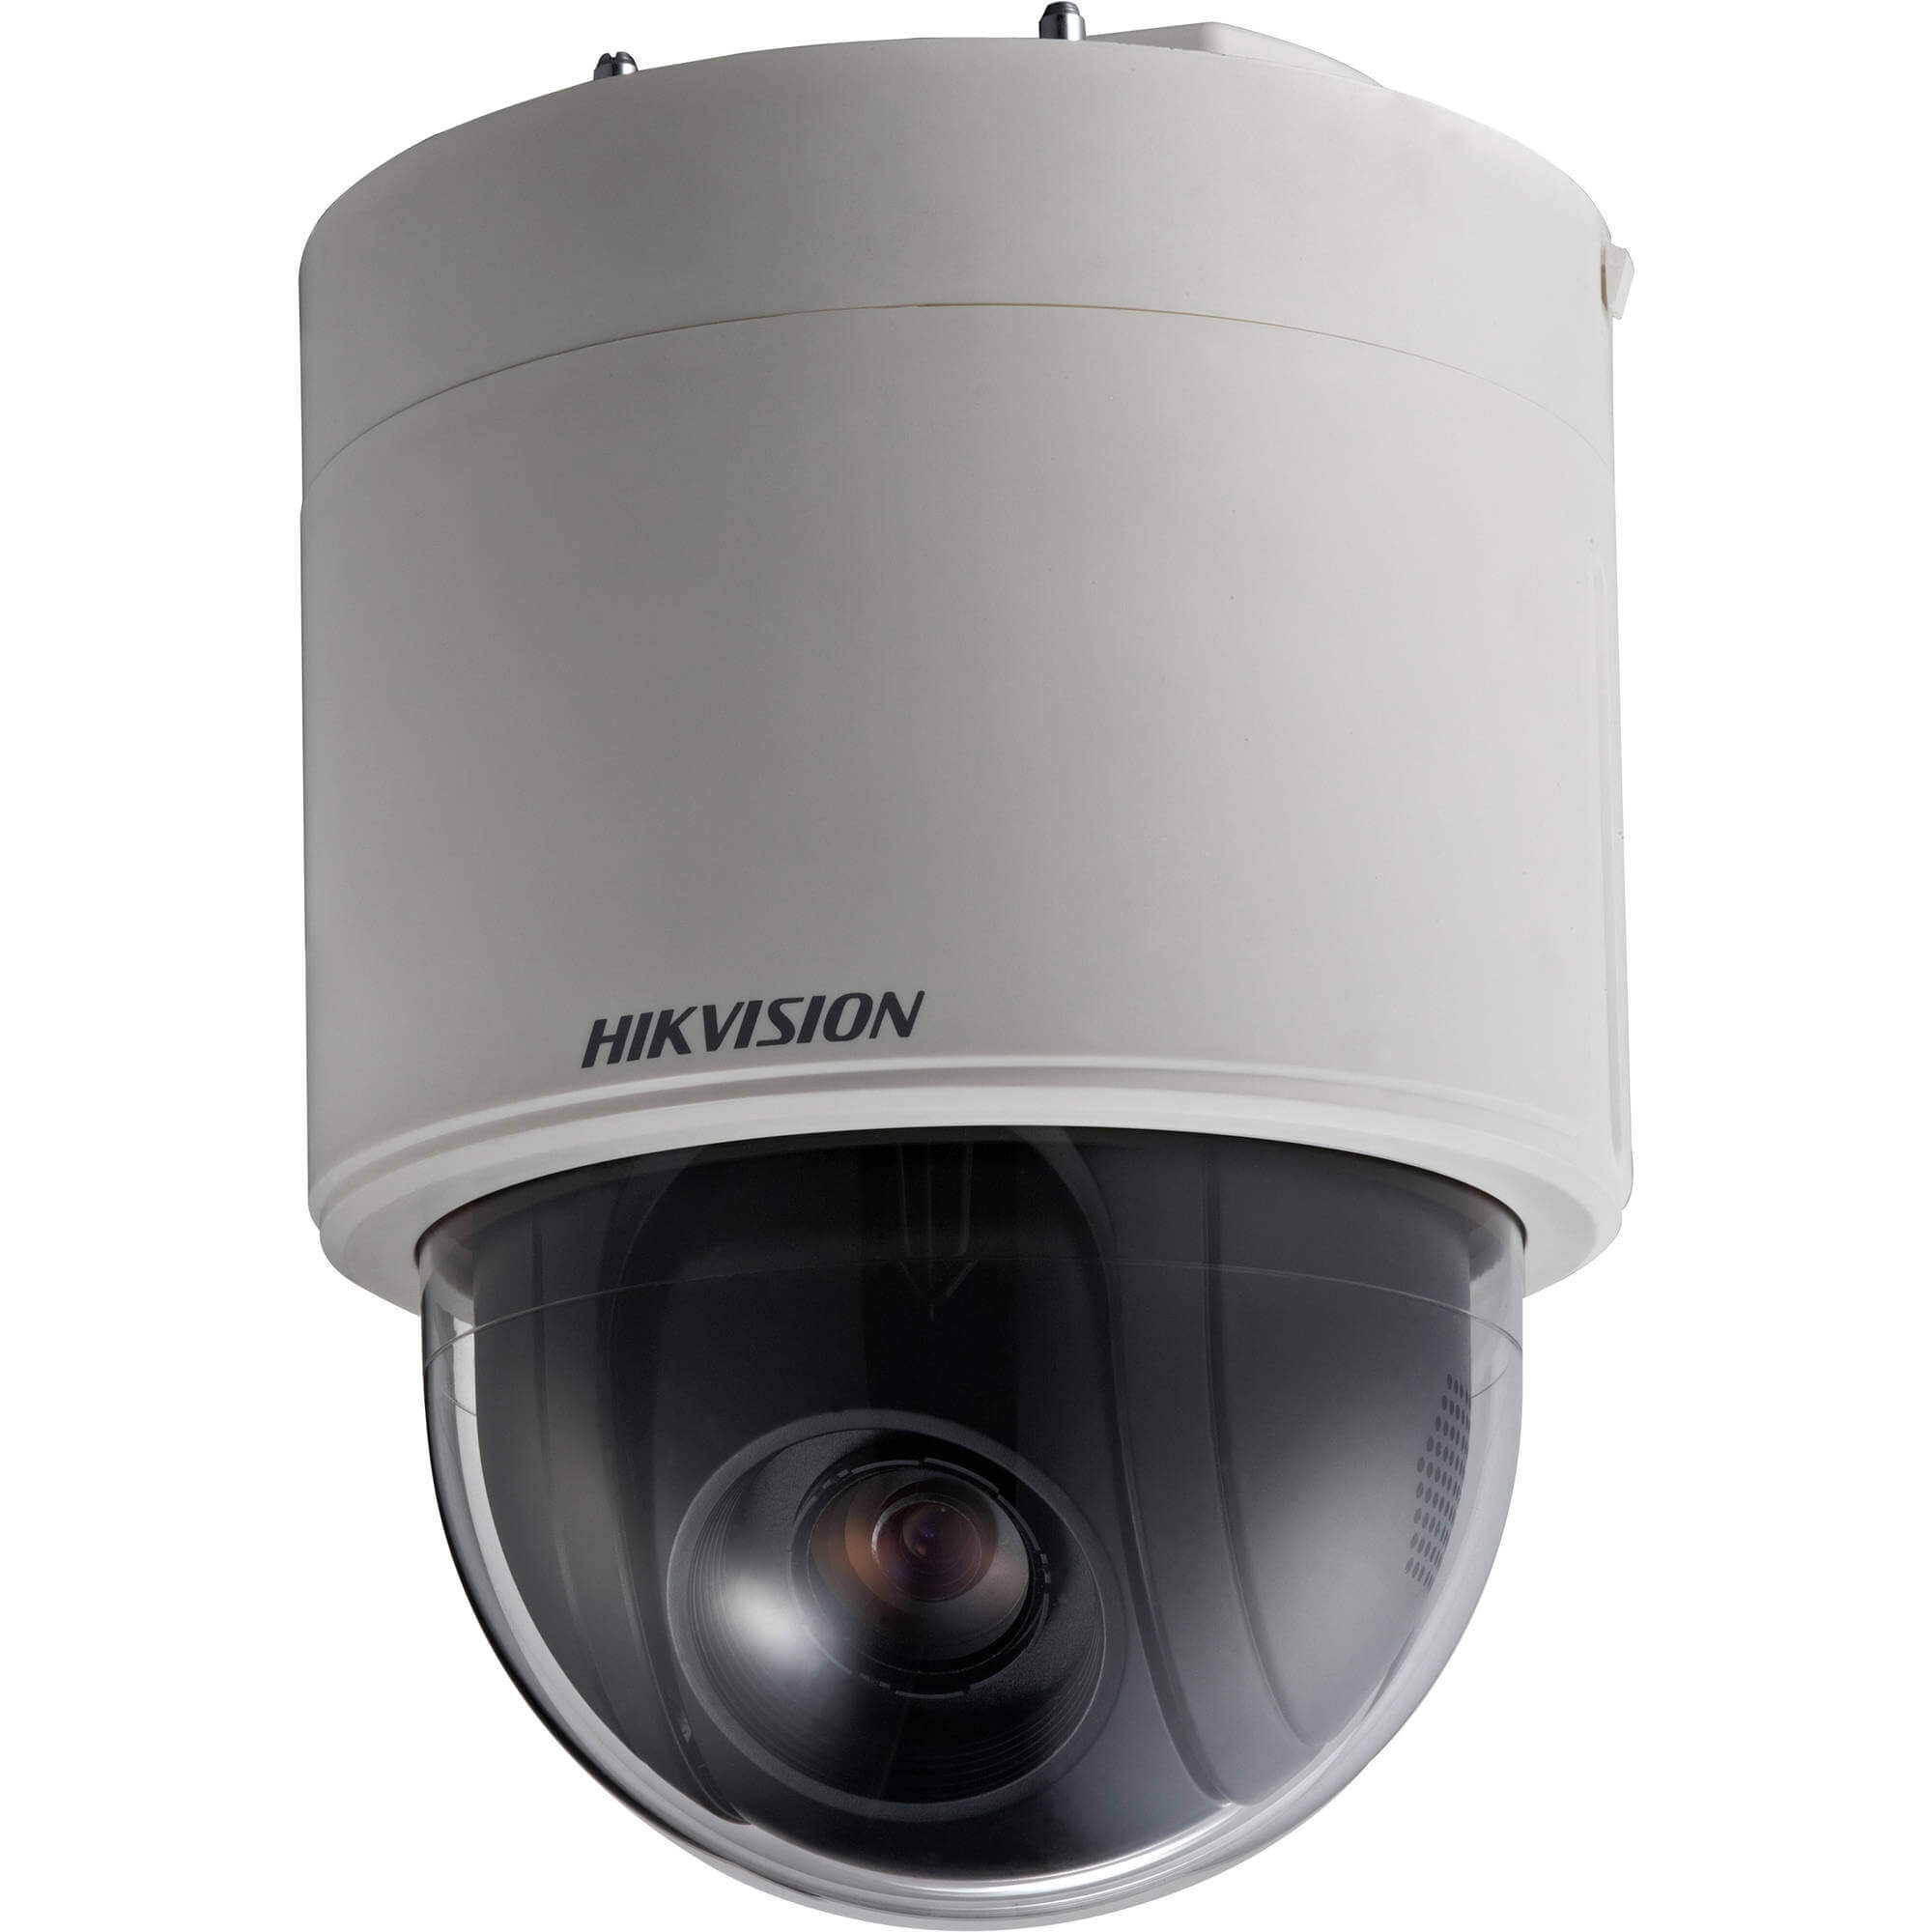  Camera de supraveghere Hikvision DS-2AE5230T-A3, 4-120mm, 1920 x 1080 